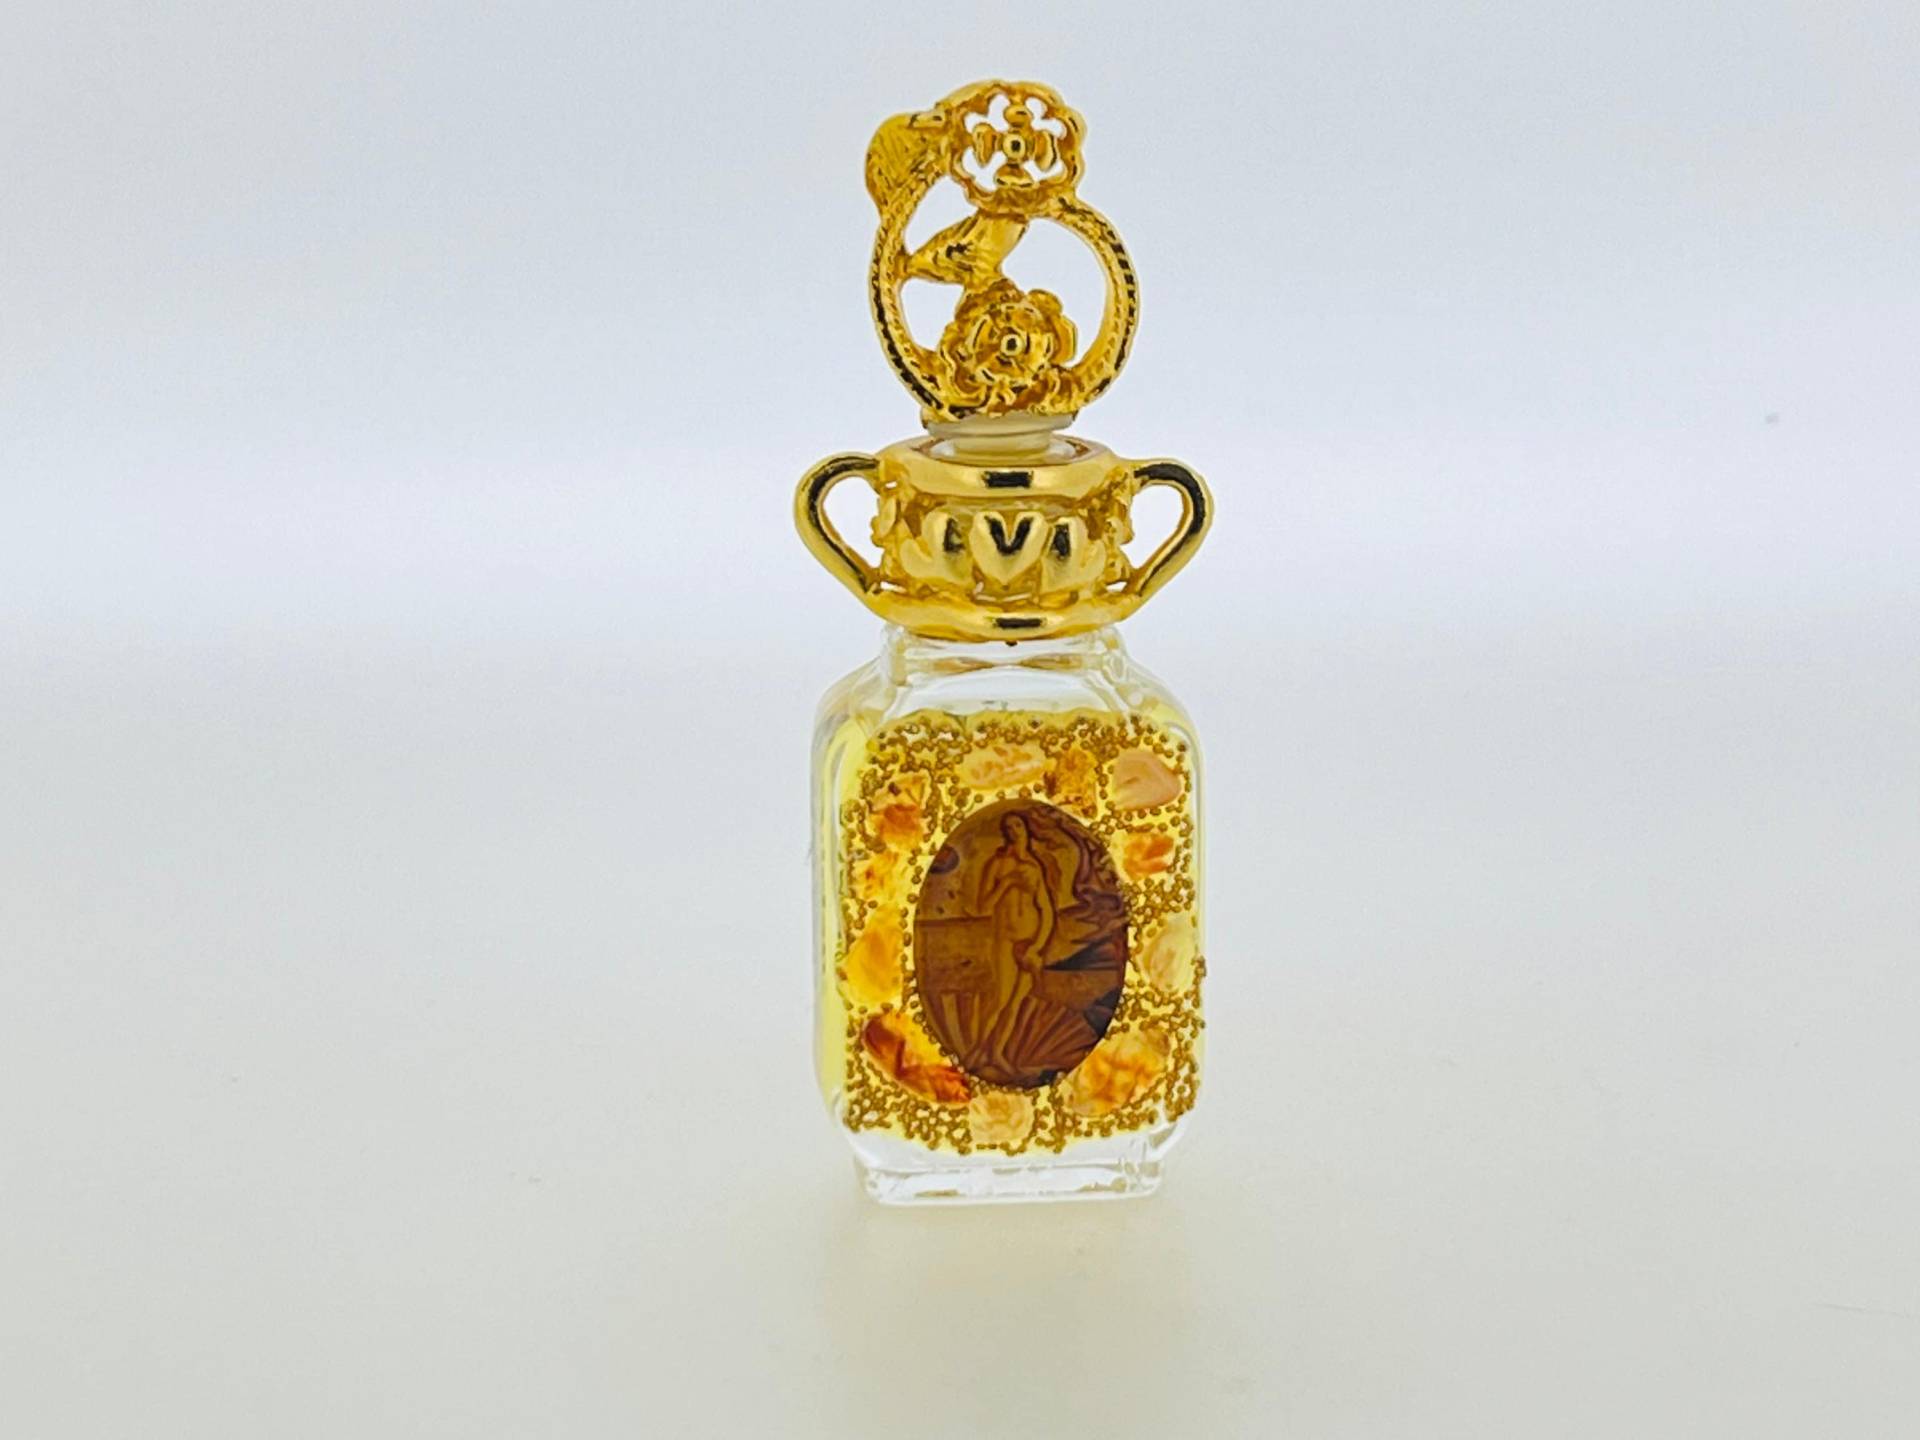 Les Objects D'art V - Señorita Elegante, Adrian Designs, Parfumöl Miniatur 5 Ml von VintagePerfumeShop